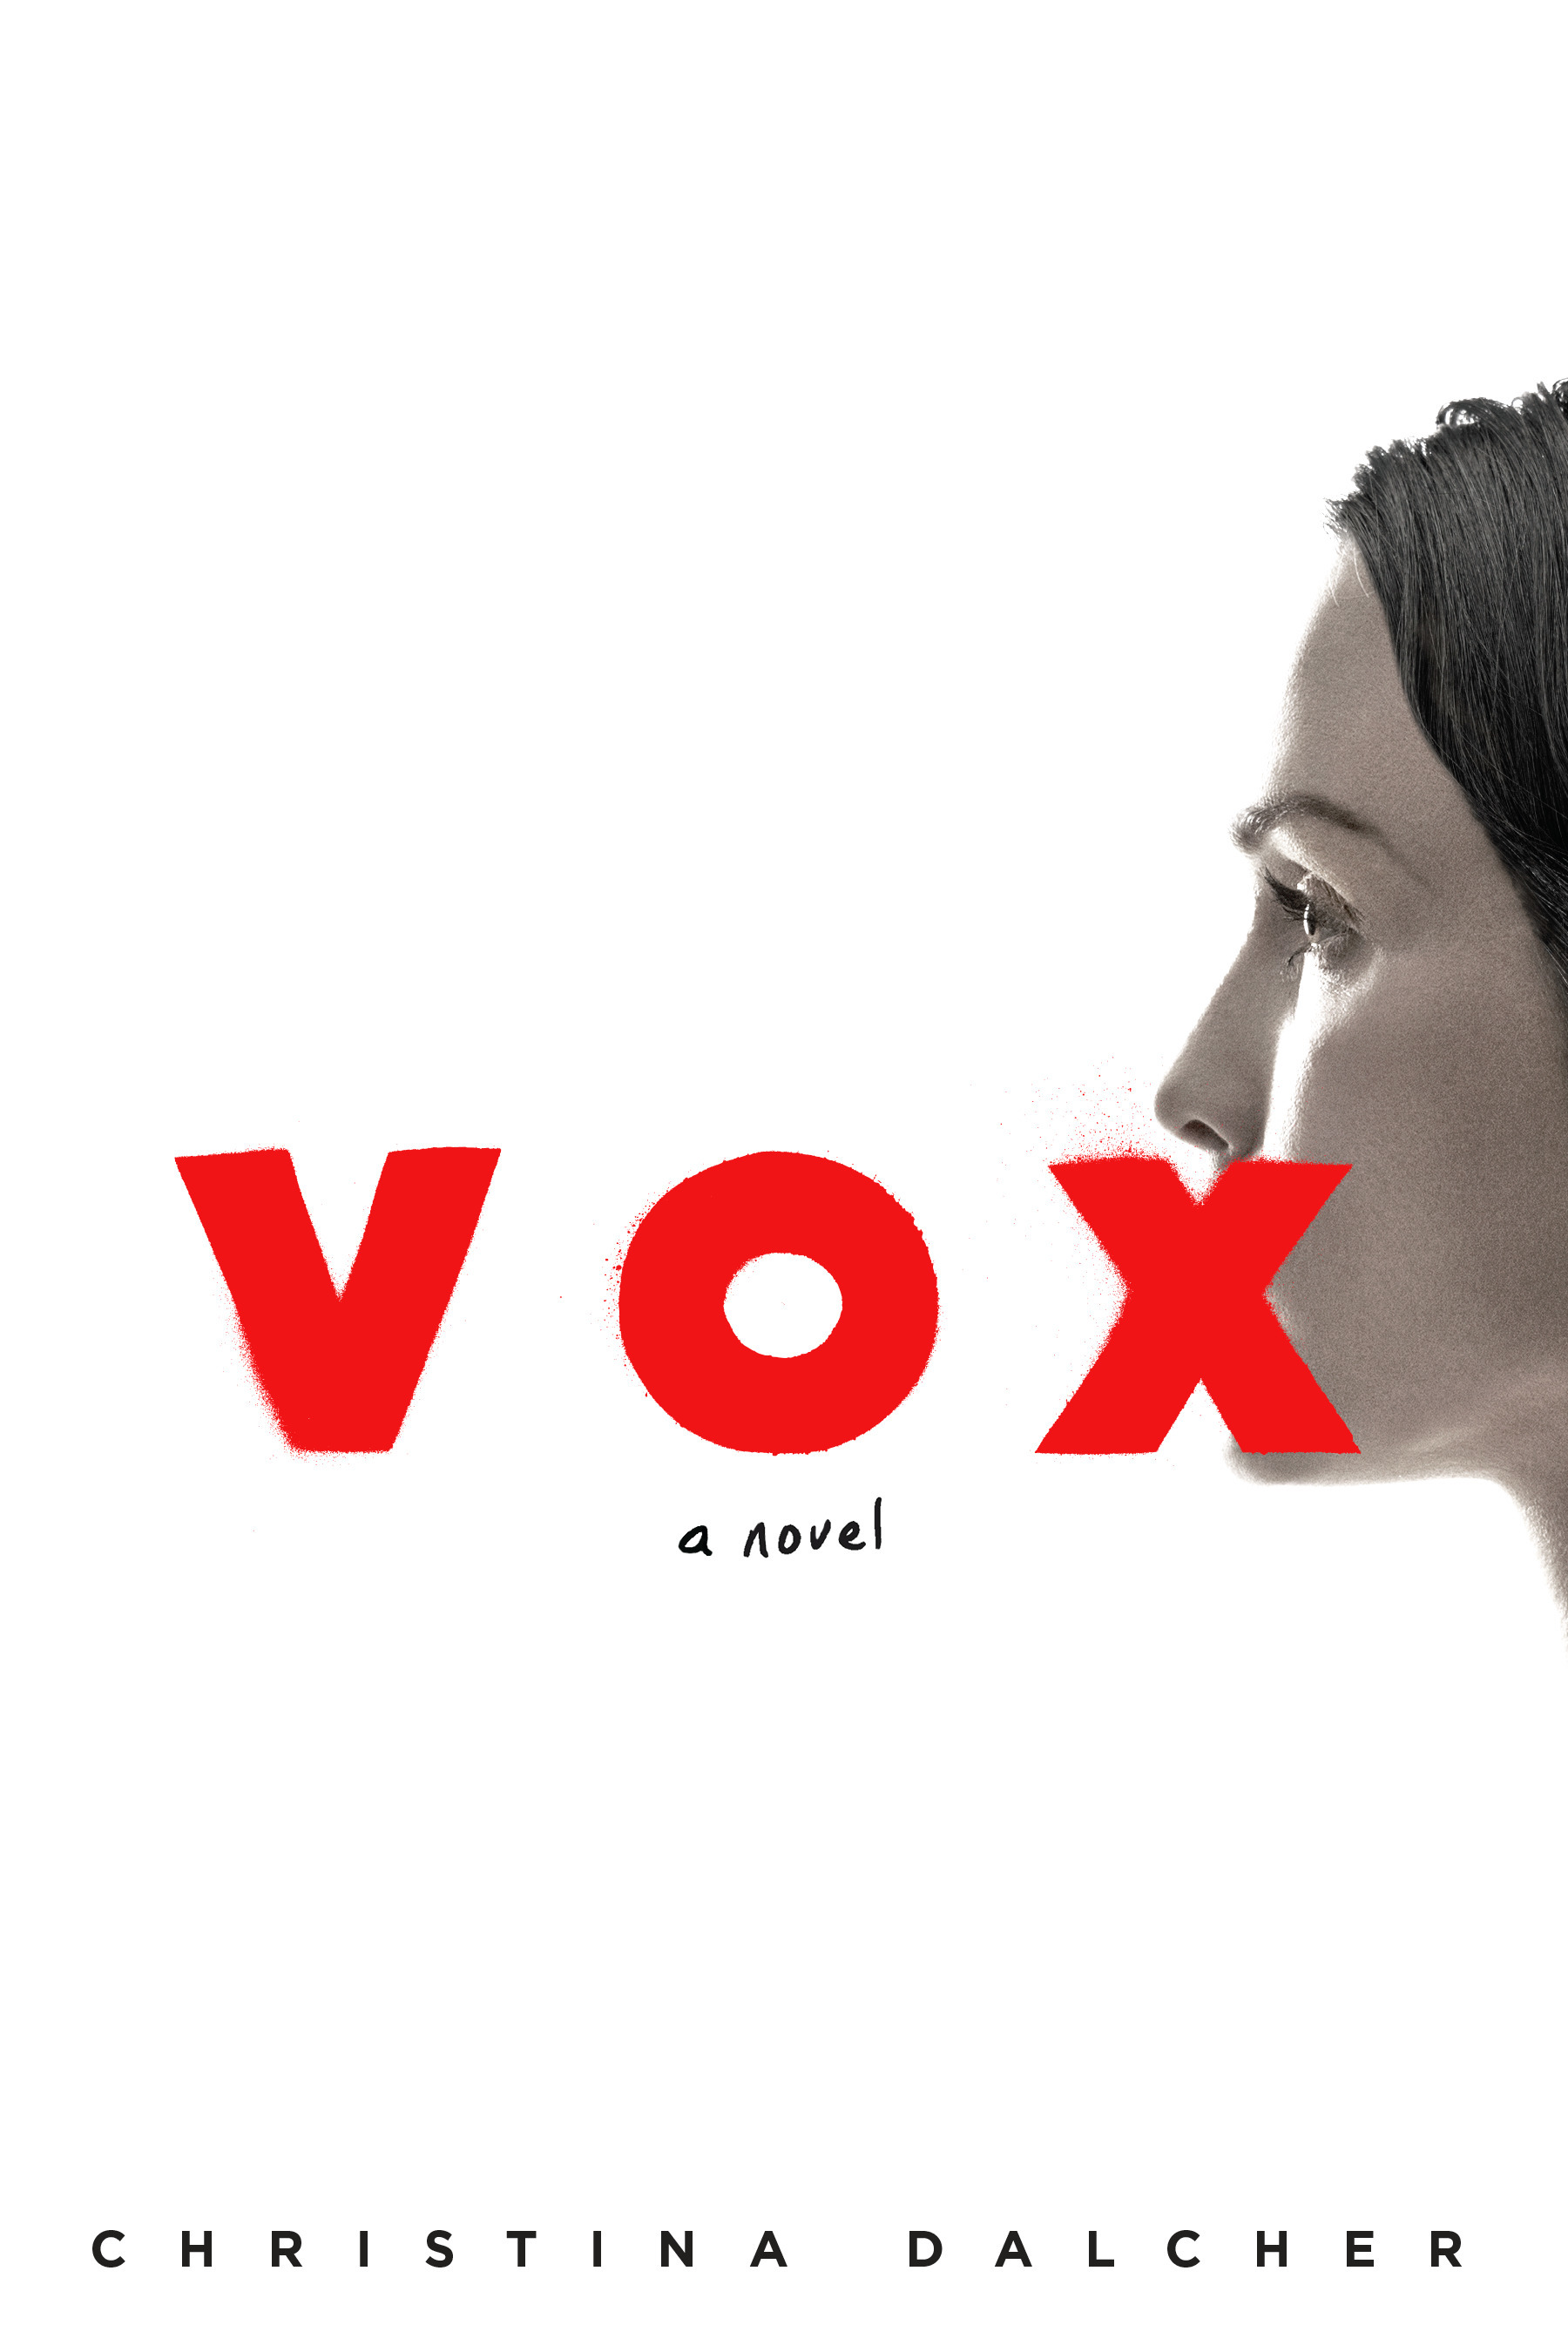 6. Vox by Christina Dalcher